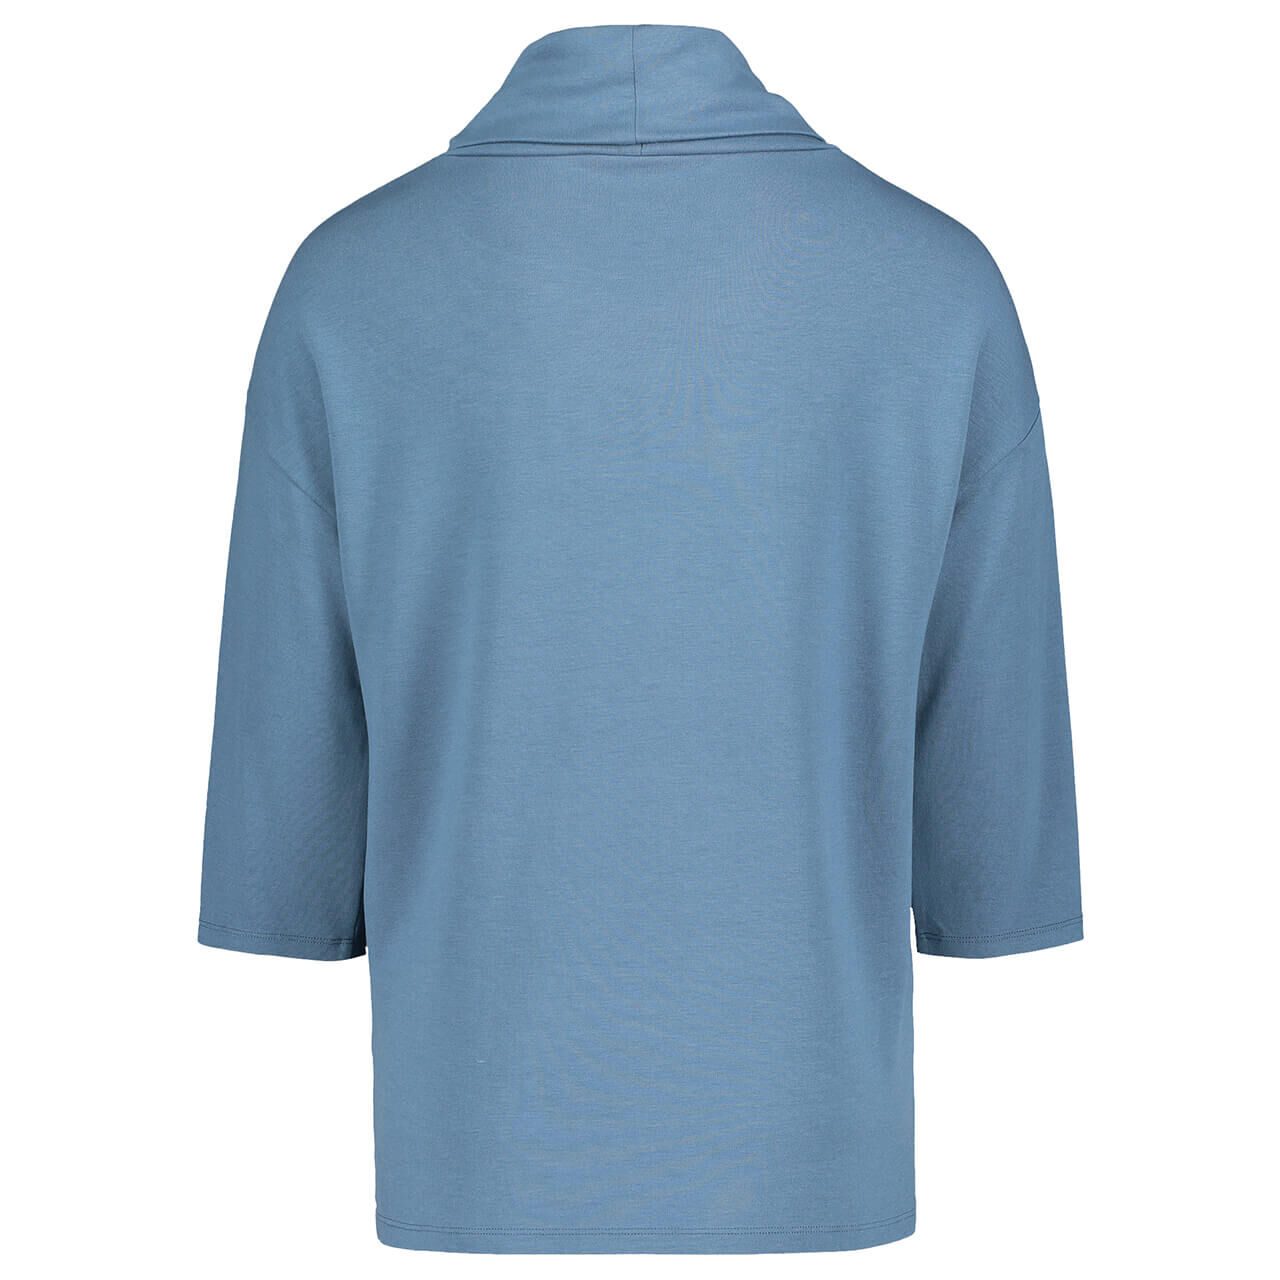 Betty Barclay Damen 3/4 Arm Rollkragen Shirt china blue